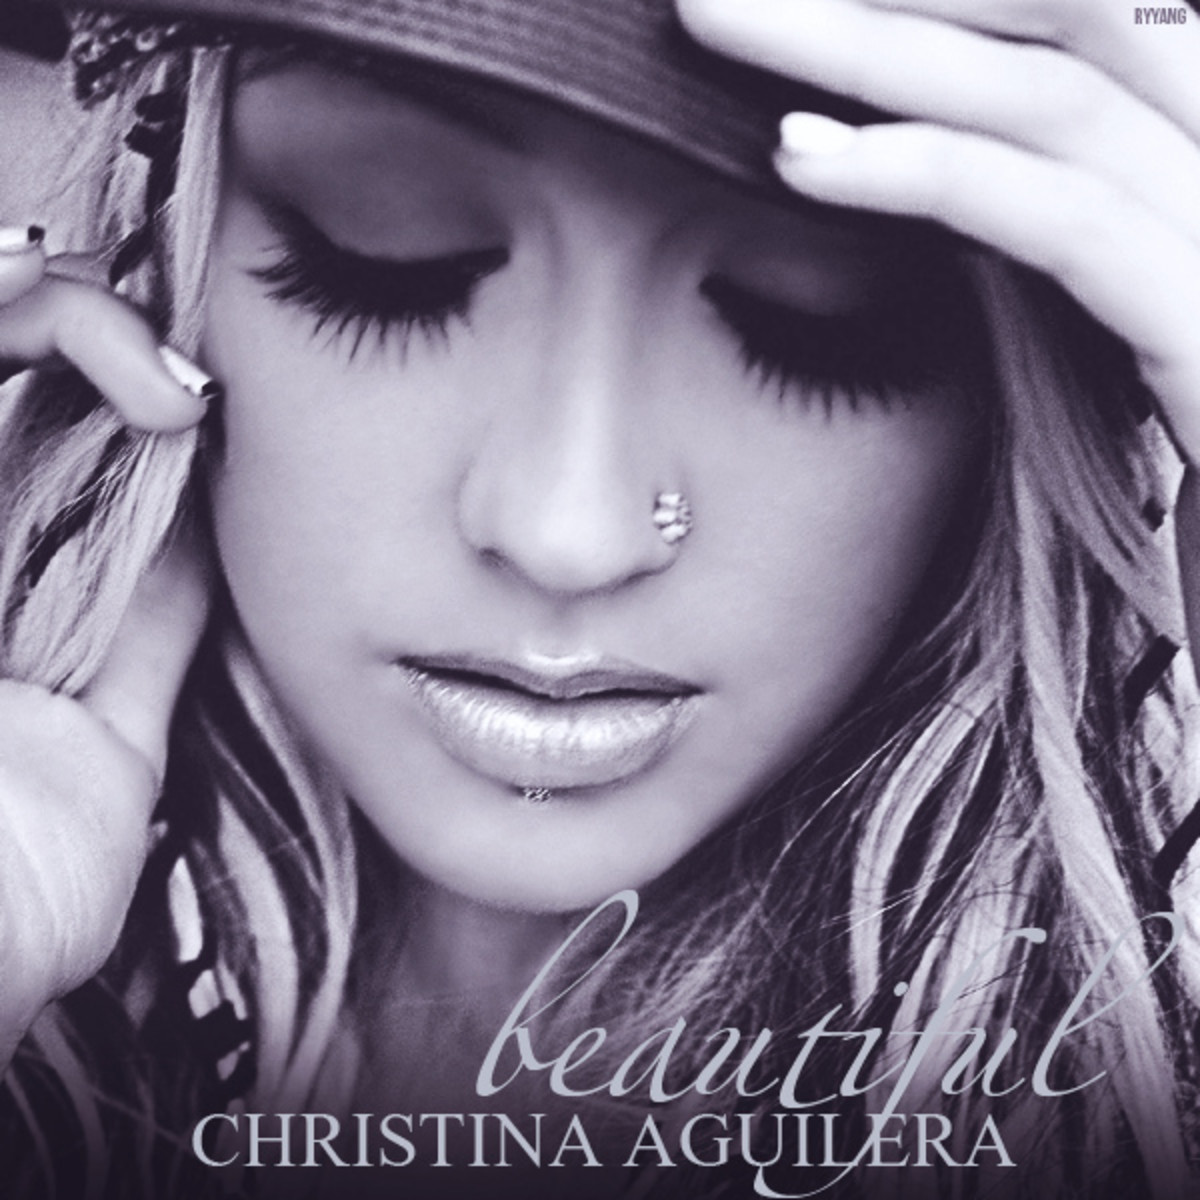 Christina Aguilera, "Beautiful"